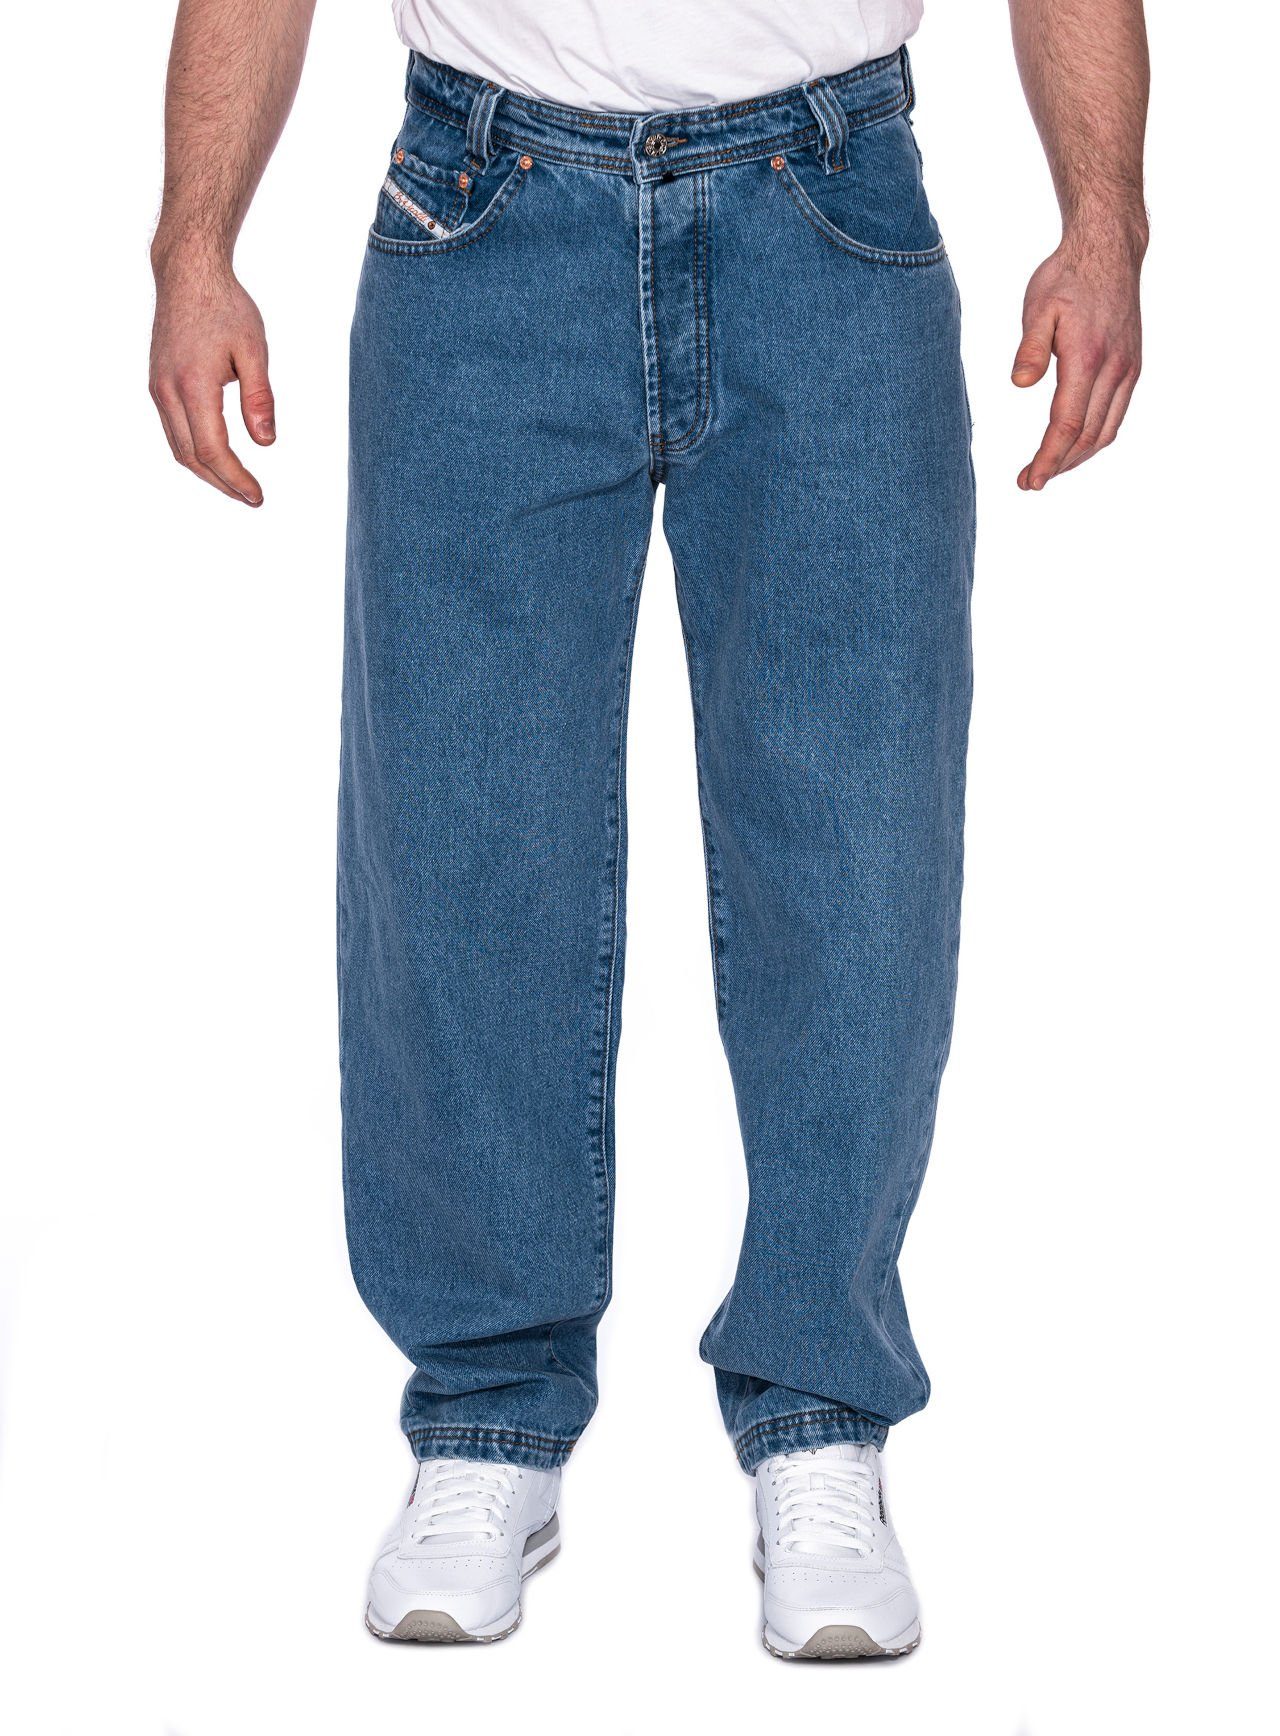 Five Loose Jeans Zicco Fit, Jeans Pocket PICALDI 471 Weite Detroit Jeans